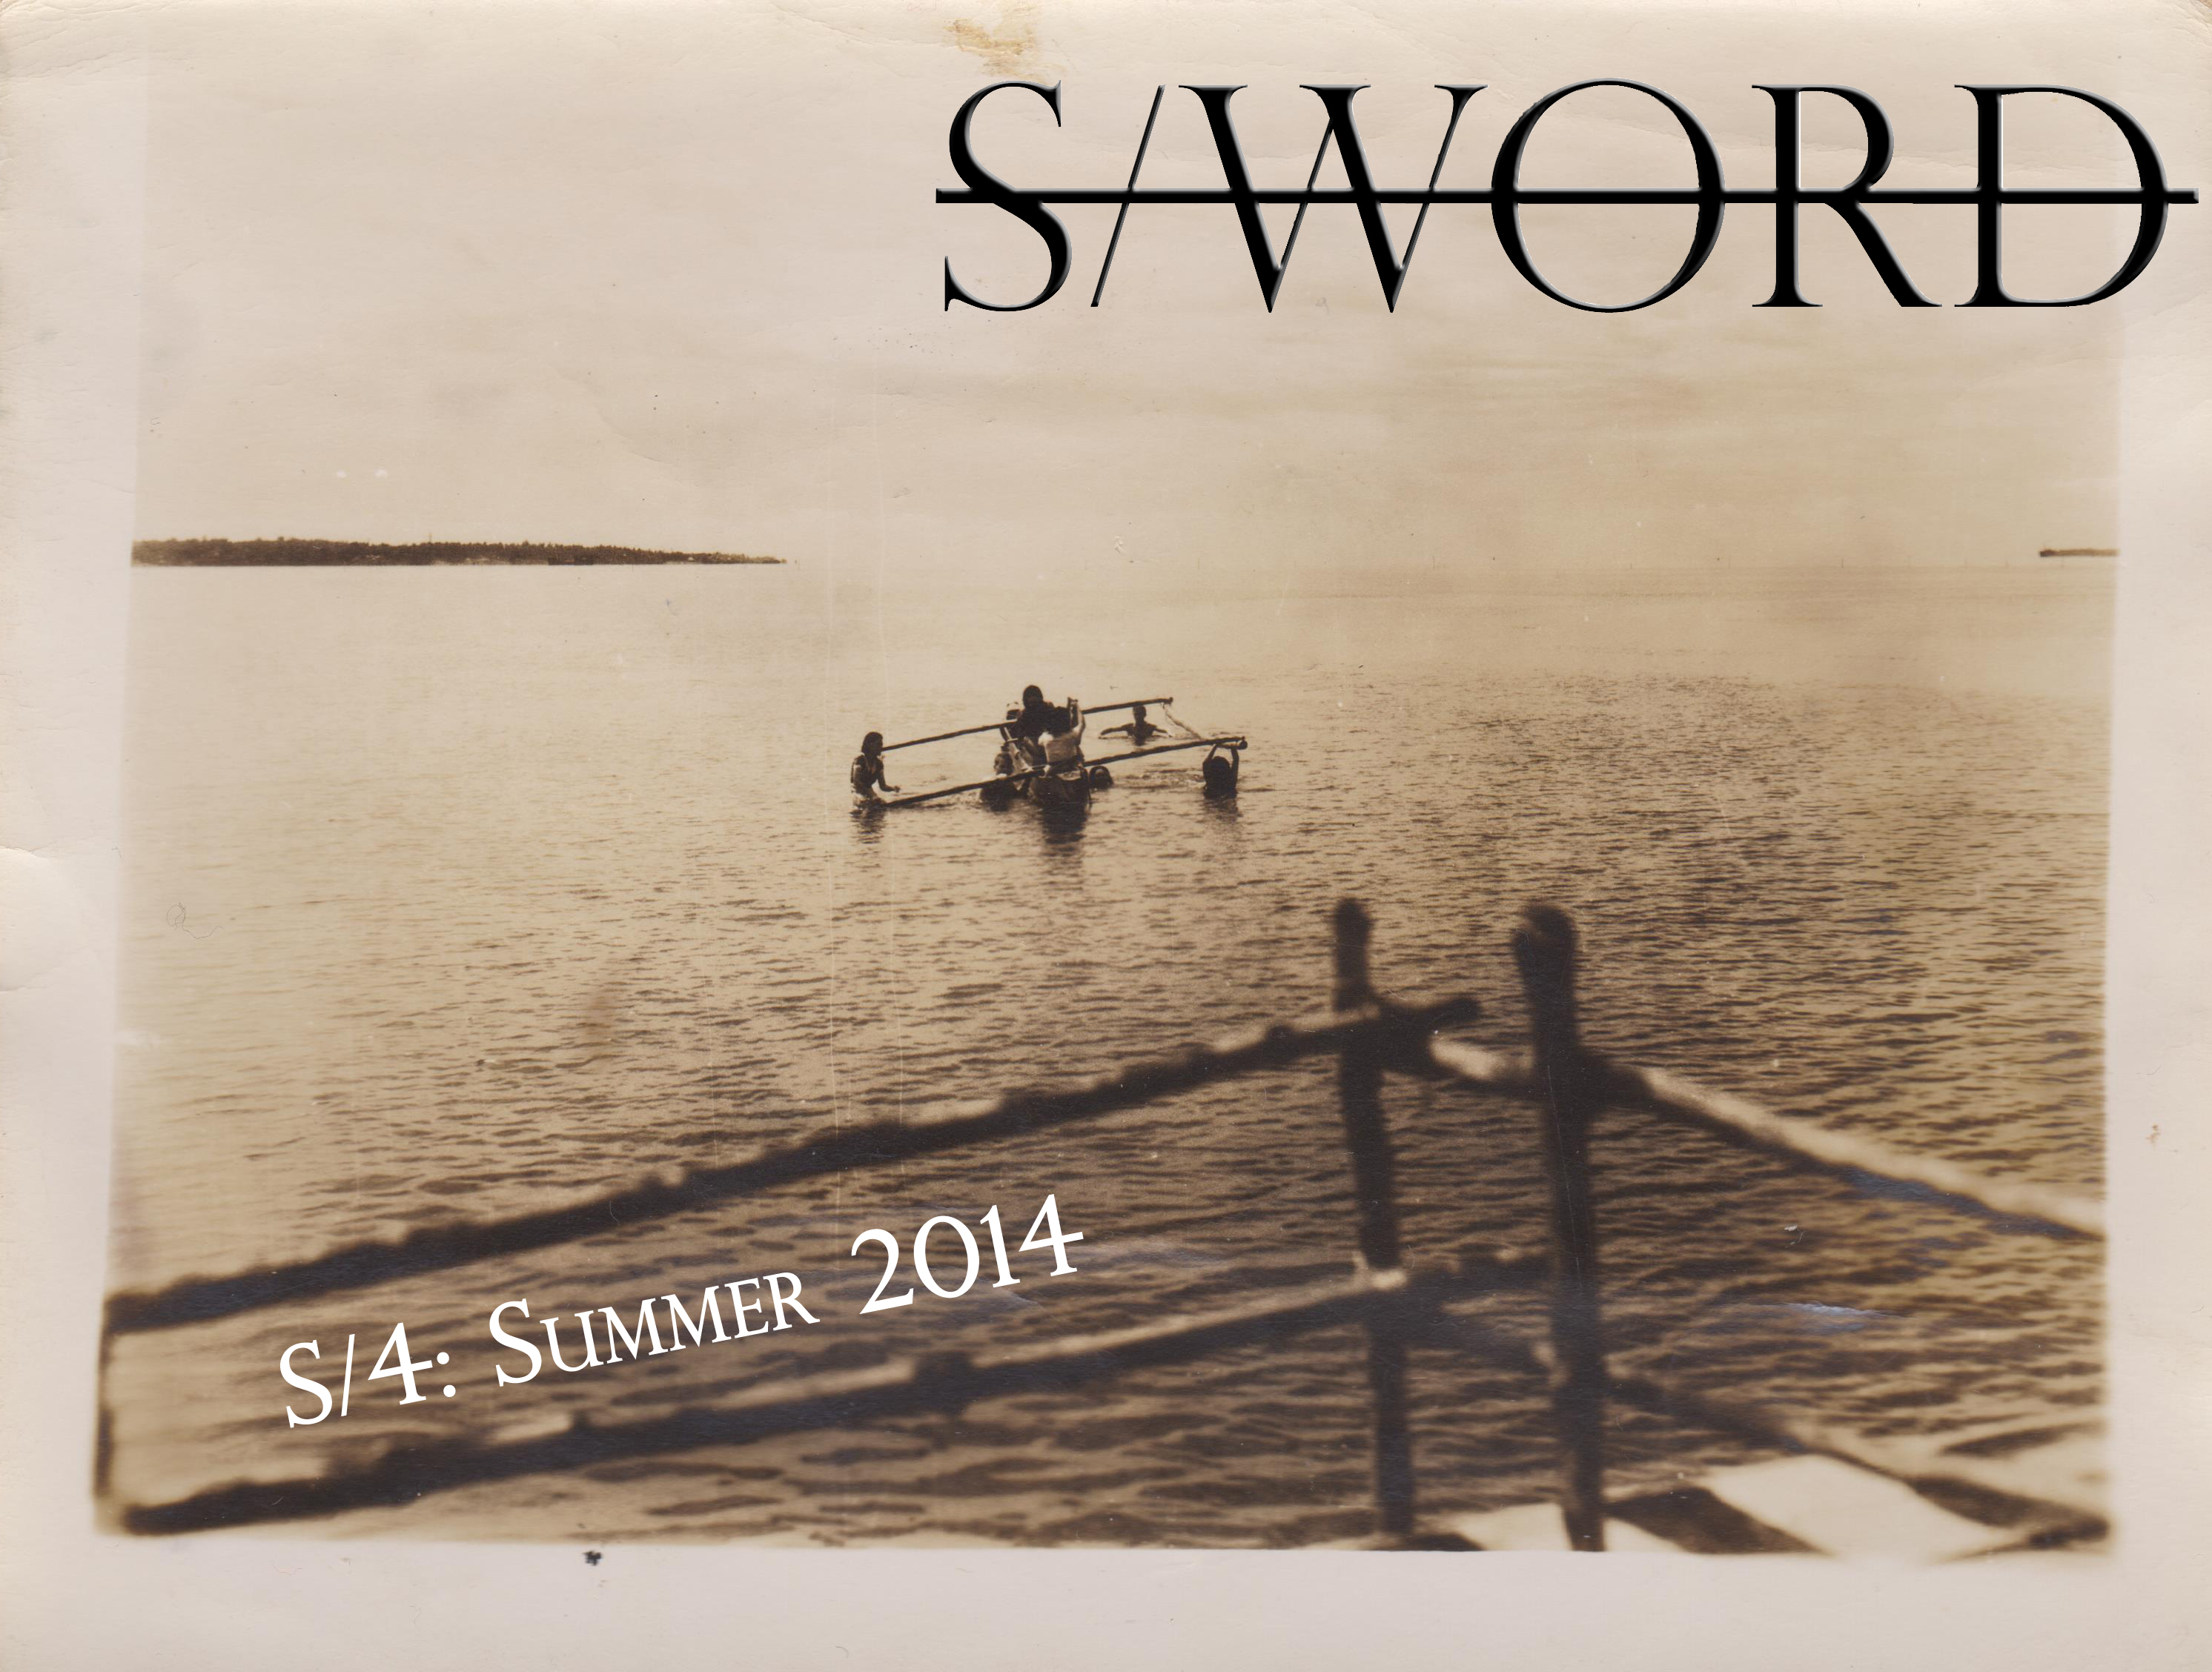 S/4: Summer 2014